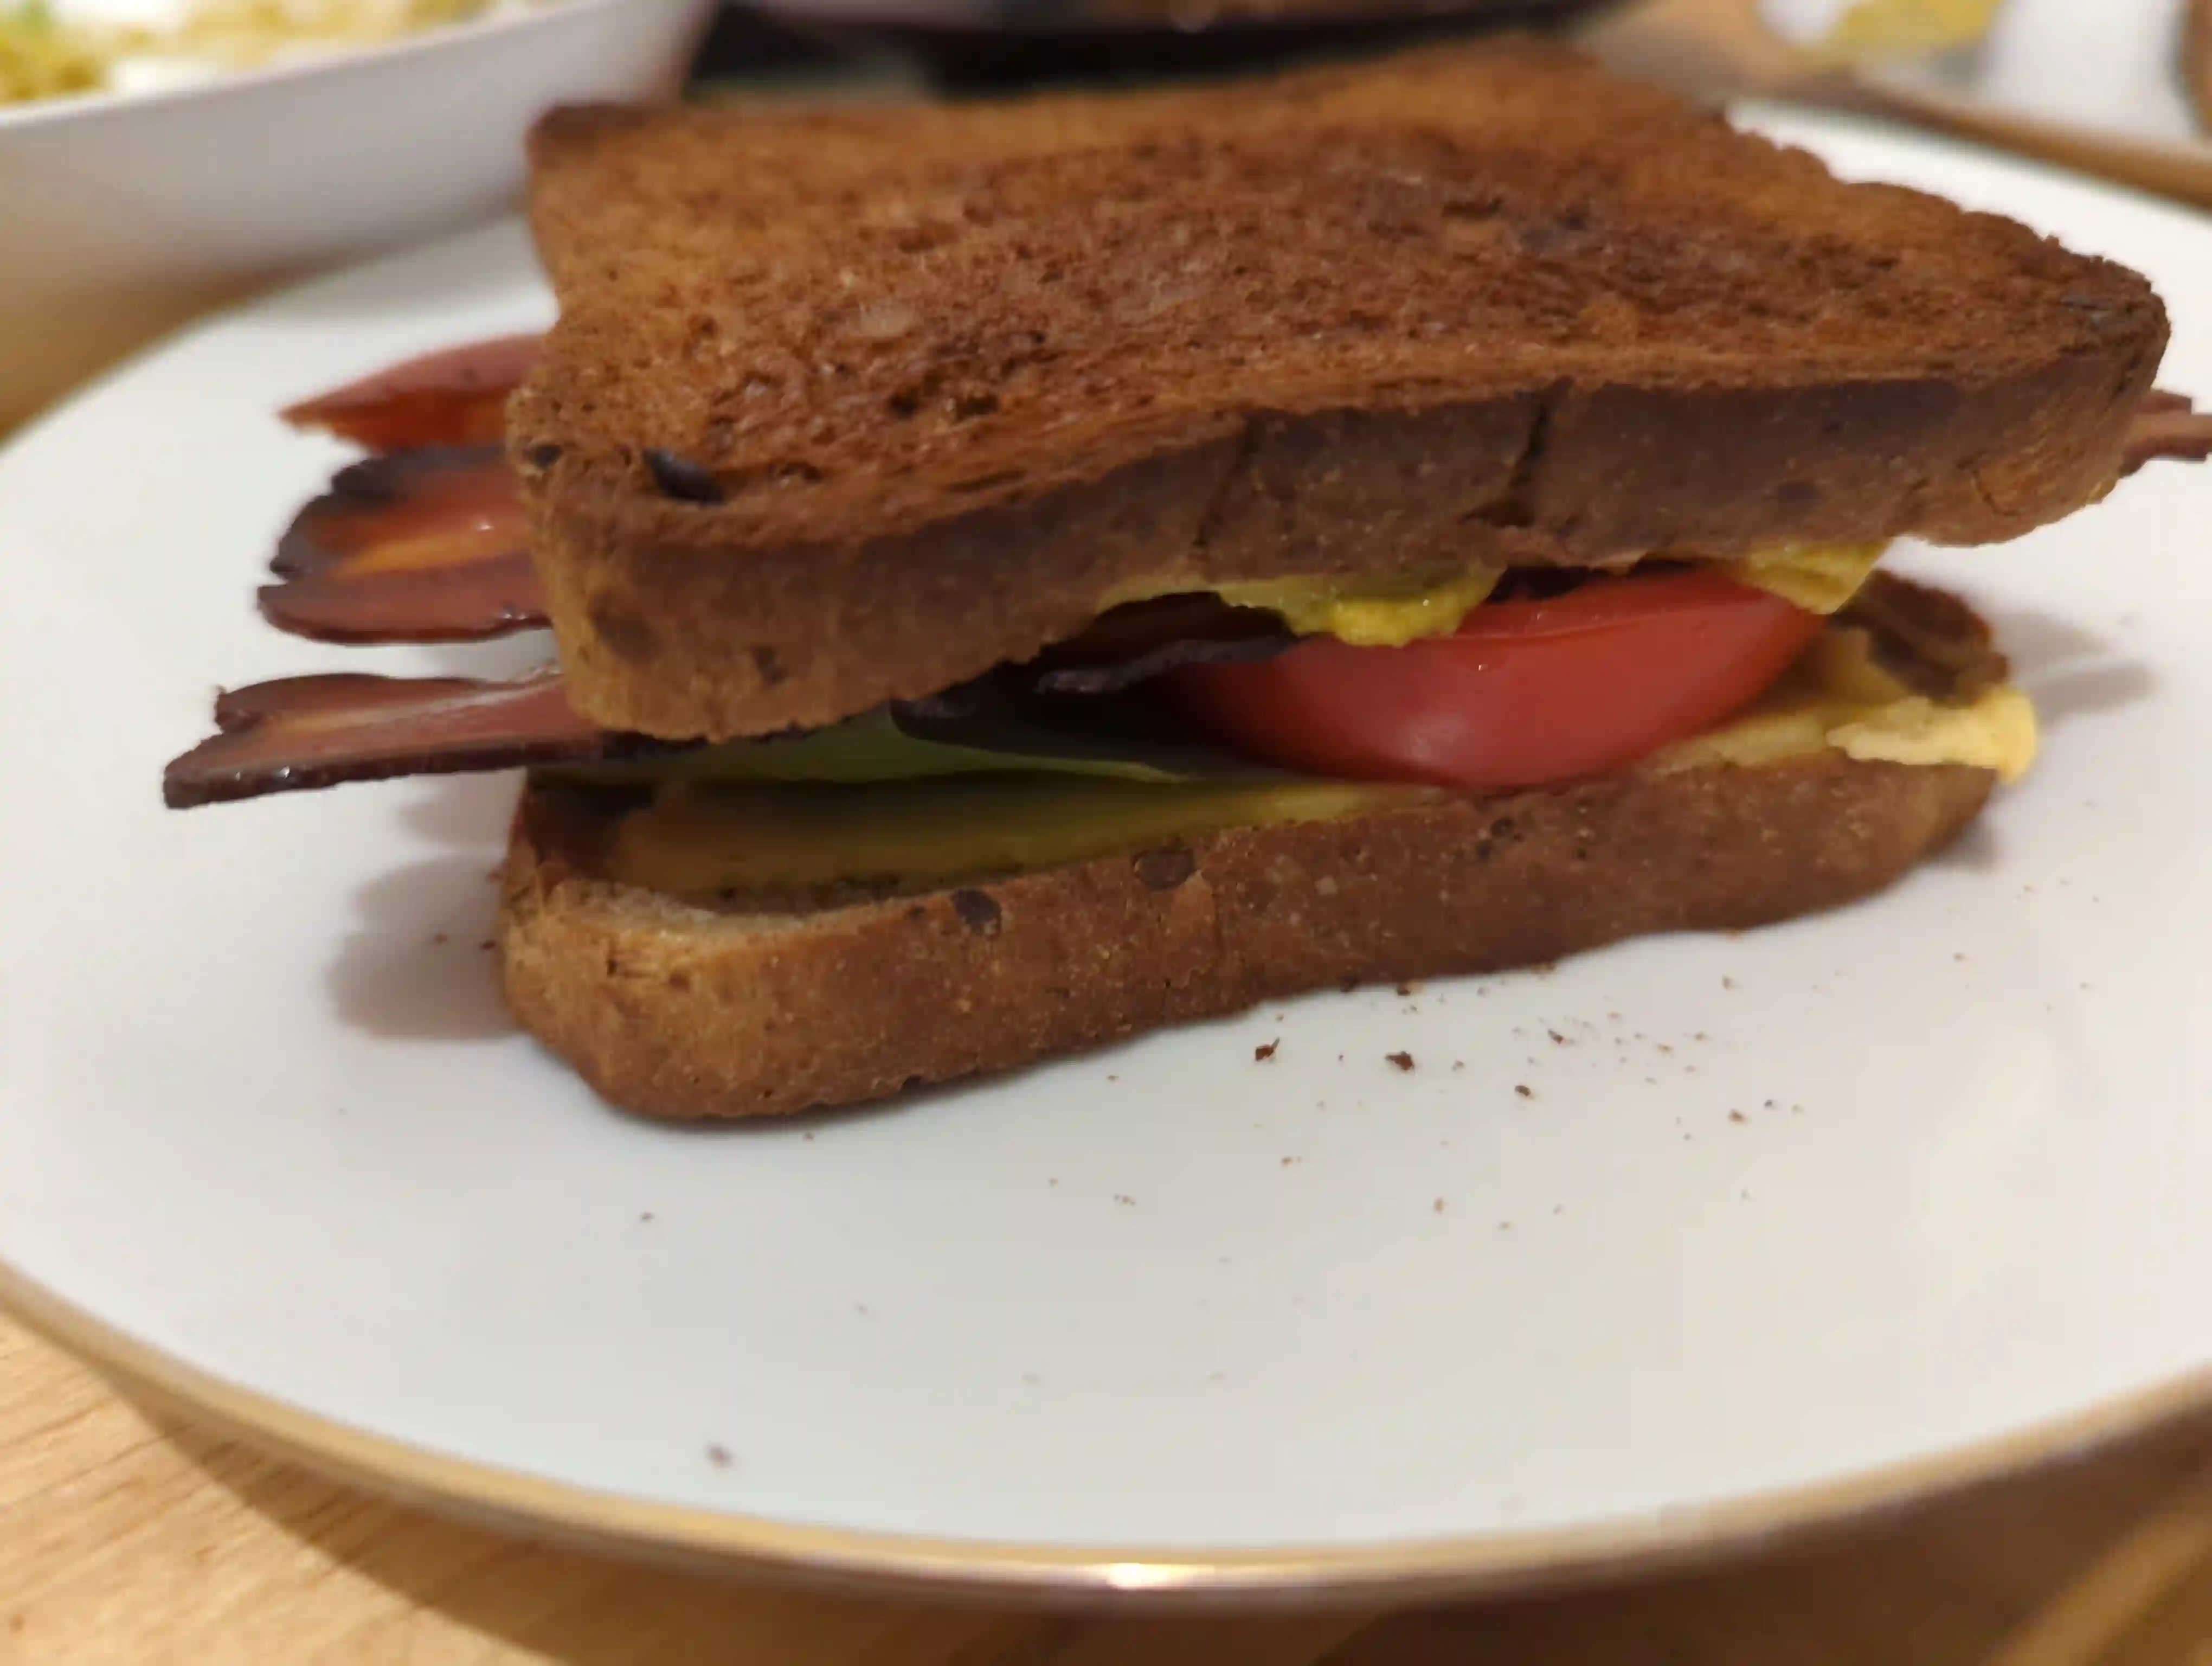 A sandwich w nicely toasted bread, crispy vegan bacon, guacamole, tomatoes, n a tiny bita lettuce